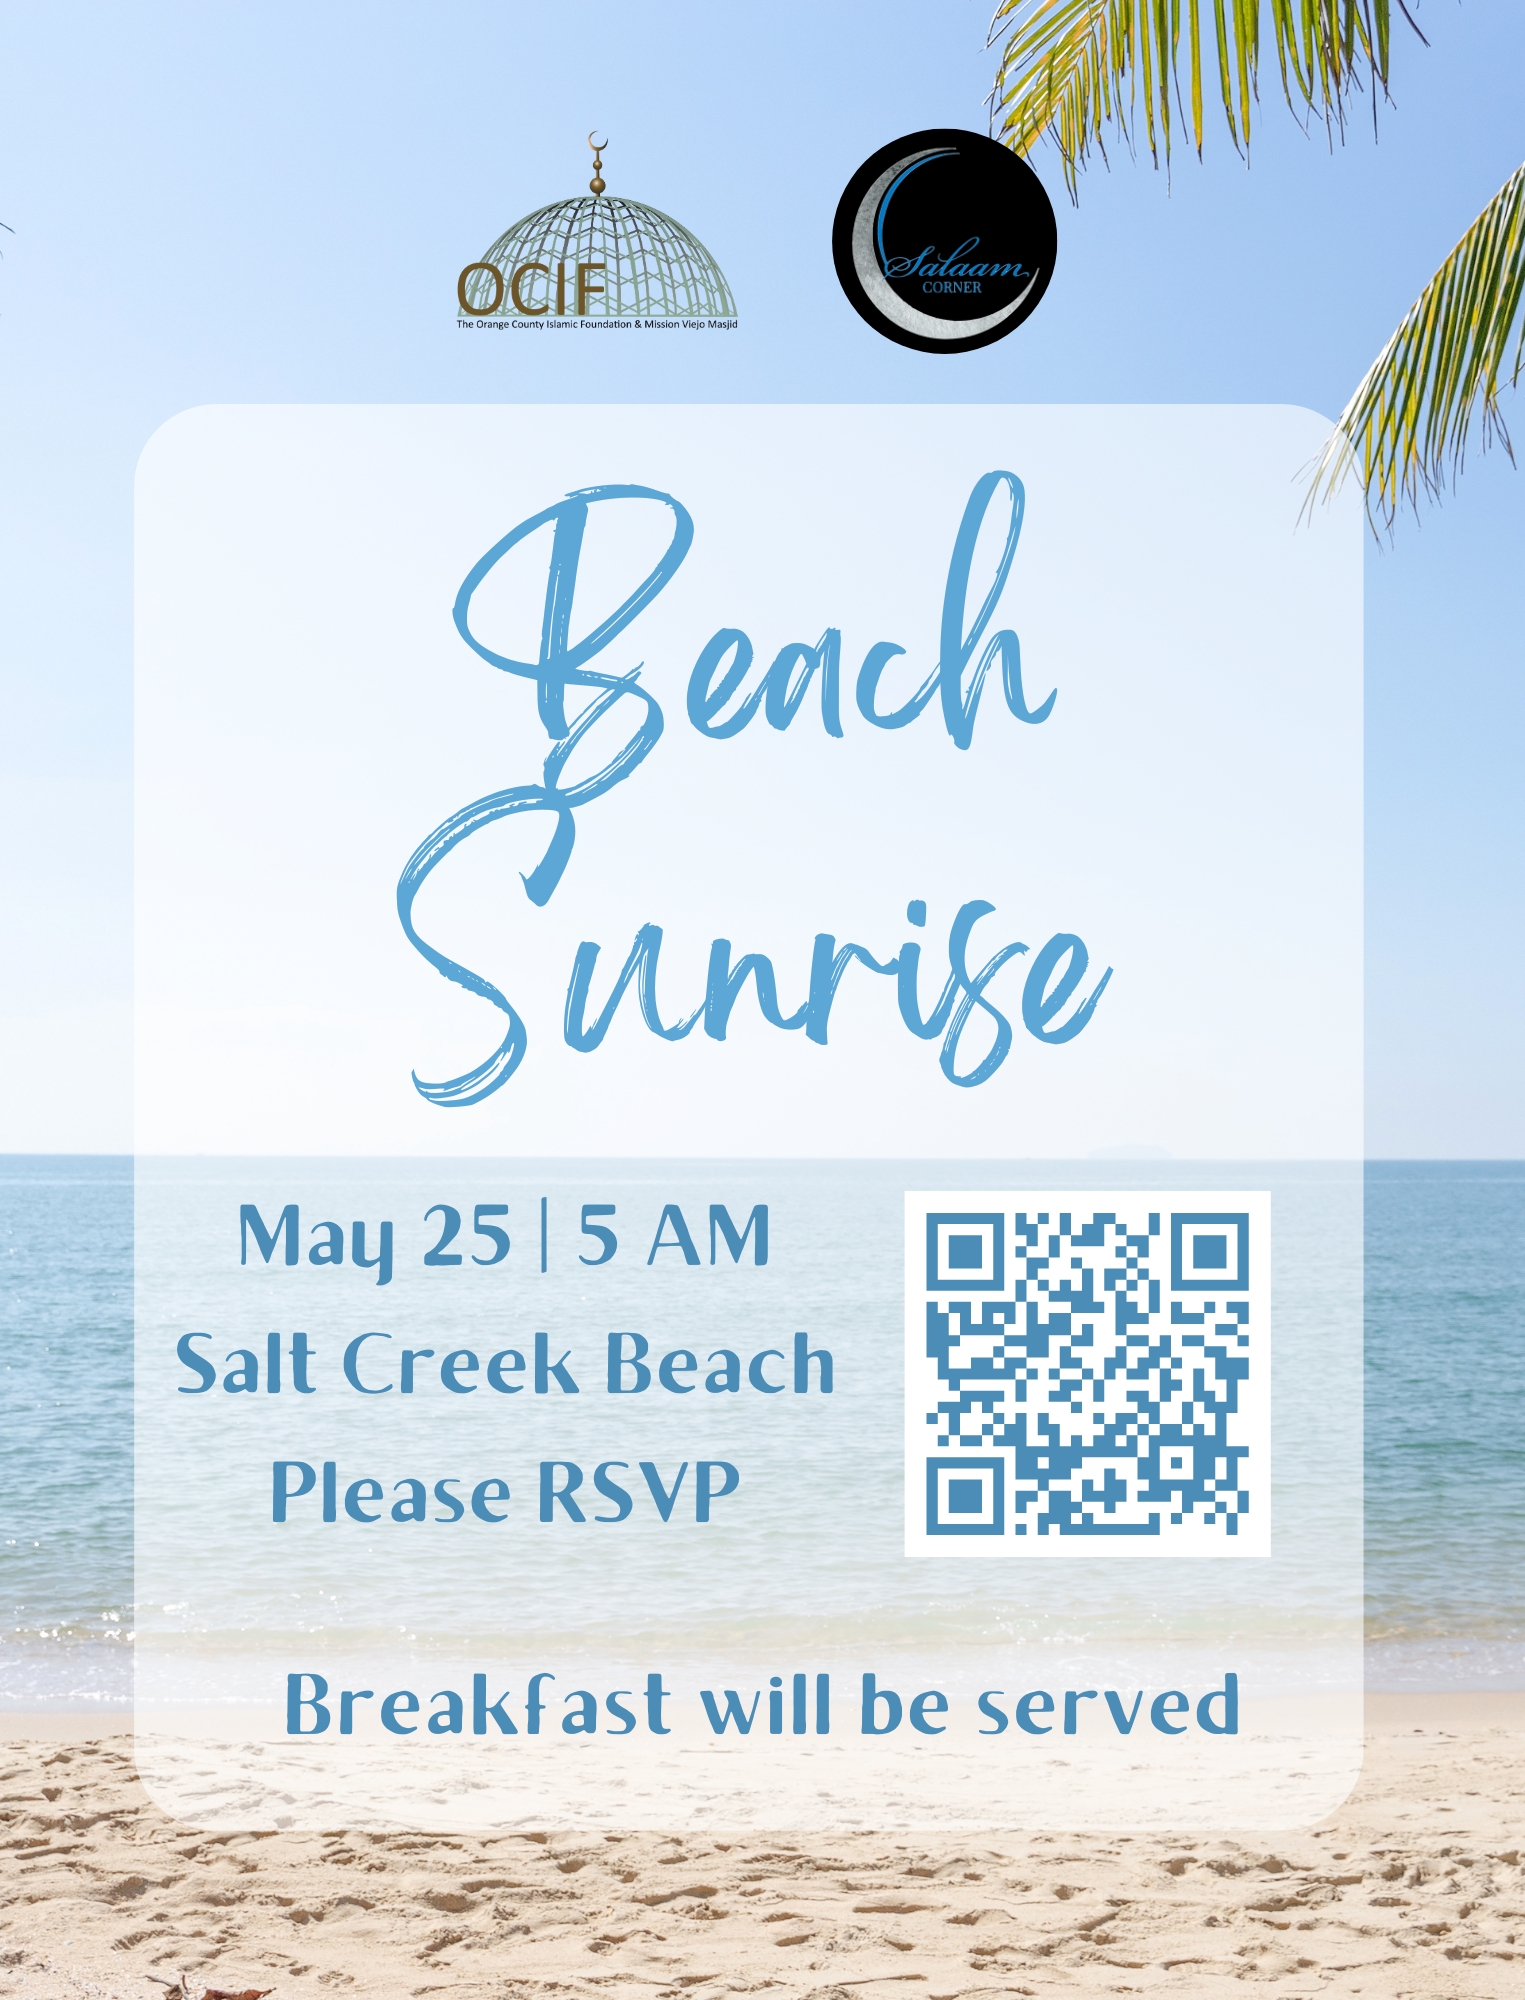 Beach Sunrise Flyer (1525 x 2000 px)